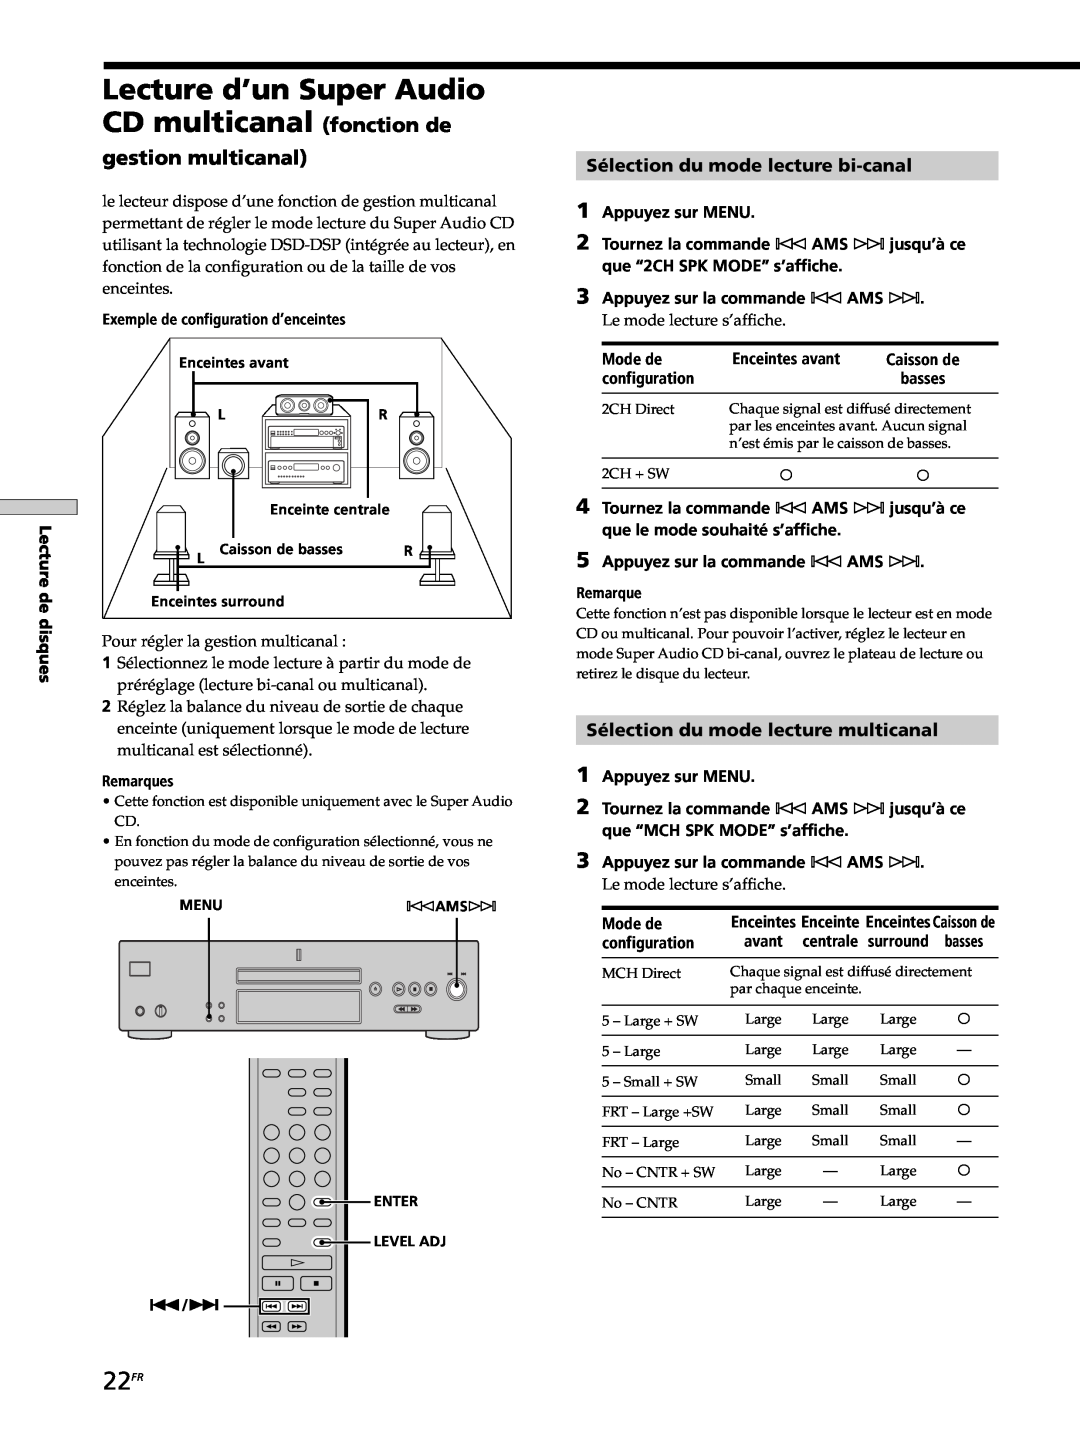 Sony SCD-XB770 22FR, gestion multicanal, Sélection du mode lecture bi-canal, Sélection du mode lecture multicanal 